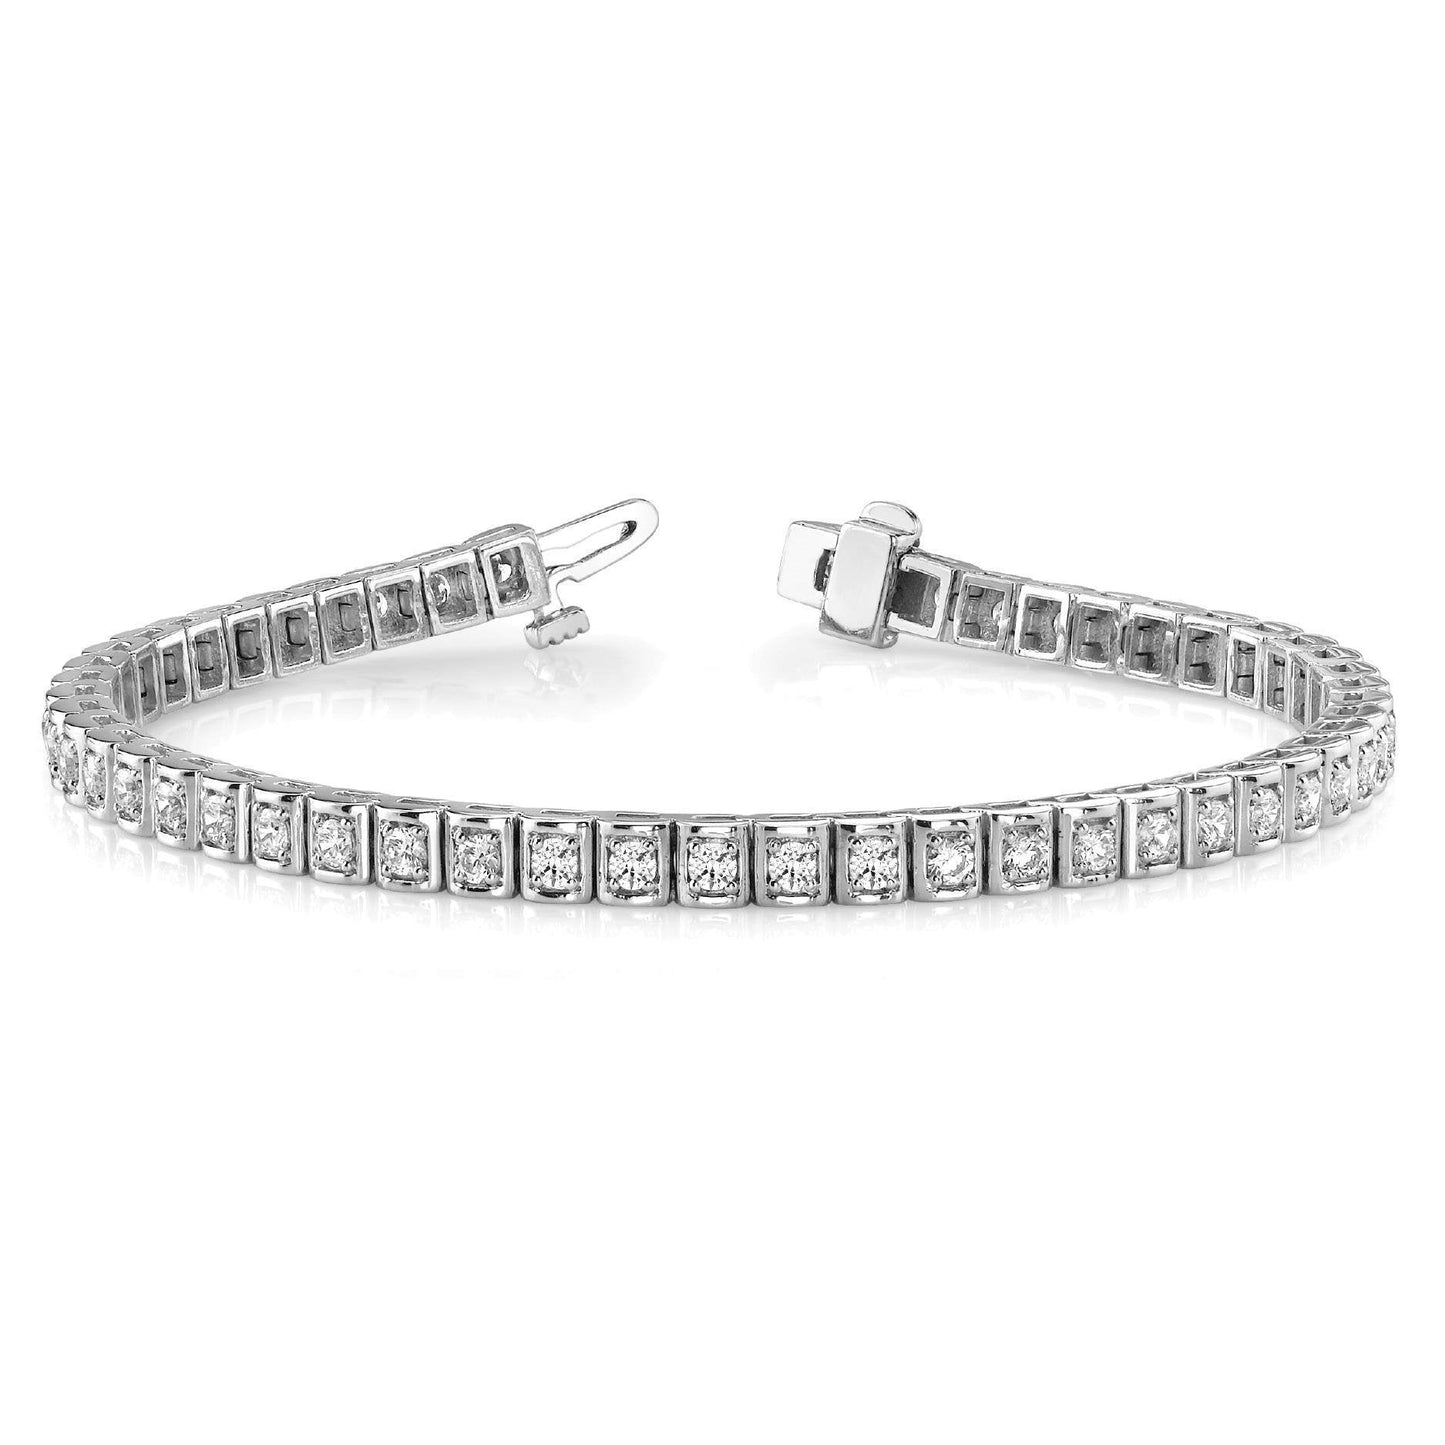 Wg 14K Sparkling Round Cut 2.55 Carats Genuine Diamonds Tennis Bracelet